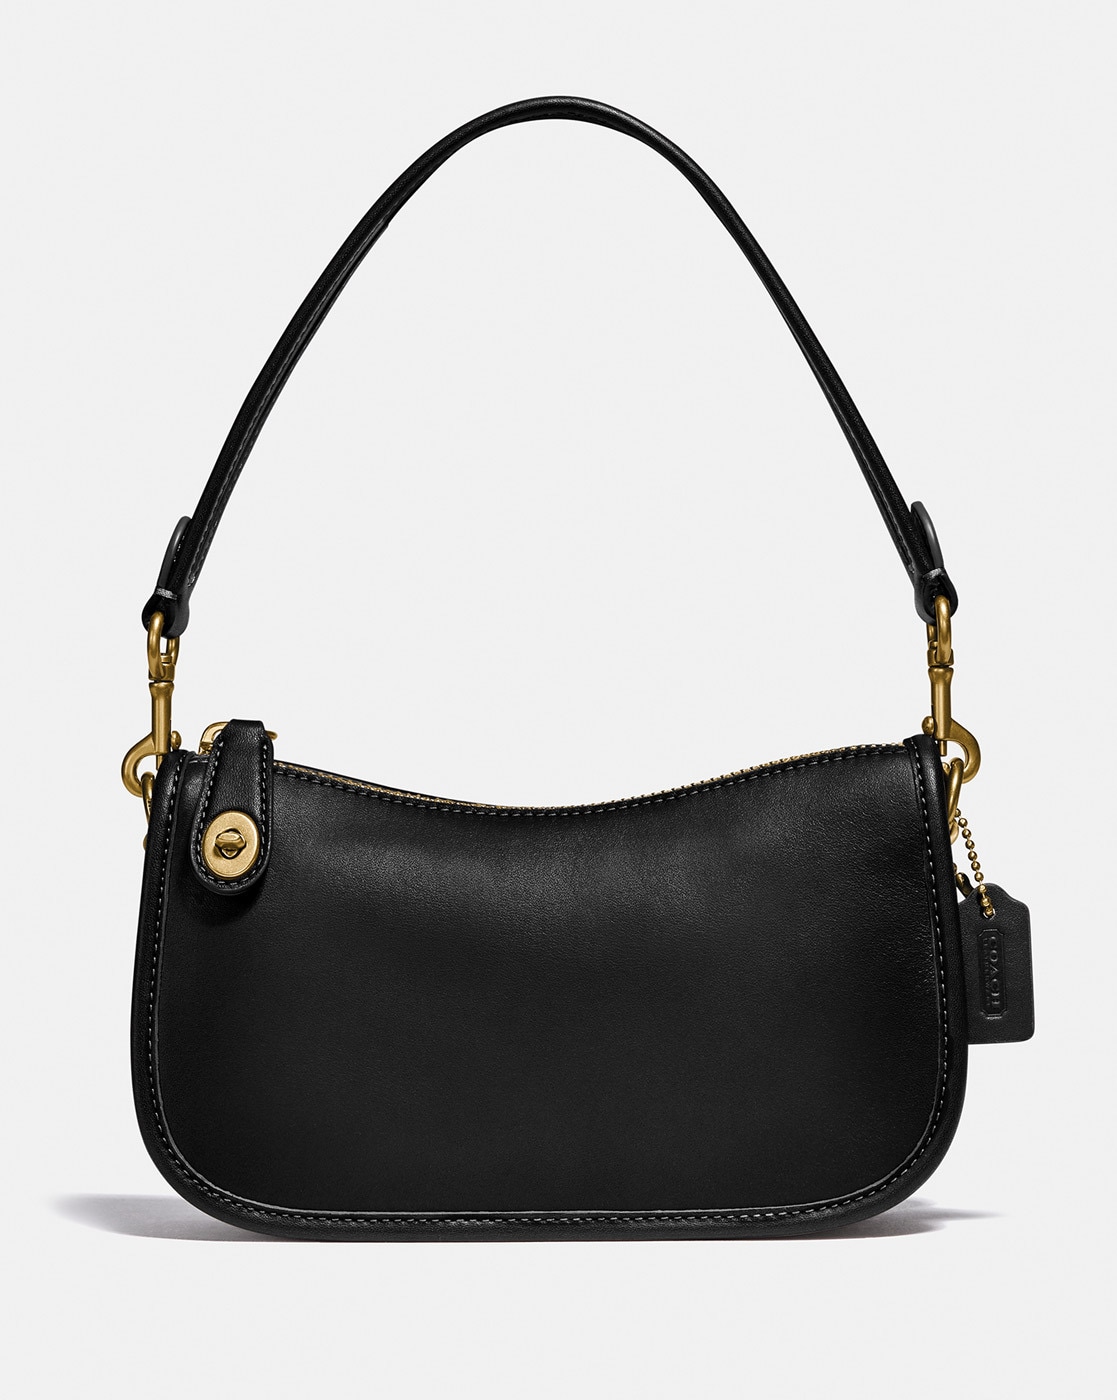 UNIQUE LIMITED EDITION COACH BAG | Coach bags, Black tote purse, Quilted  handbags